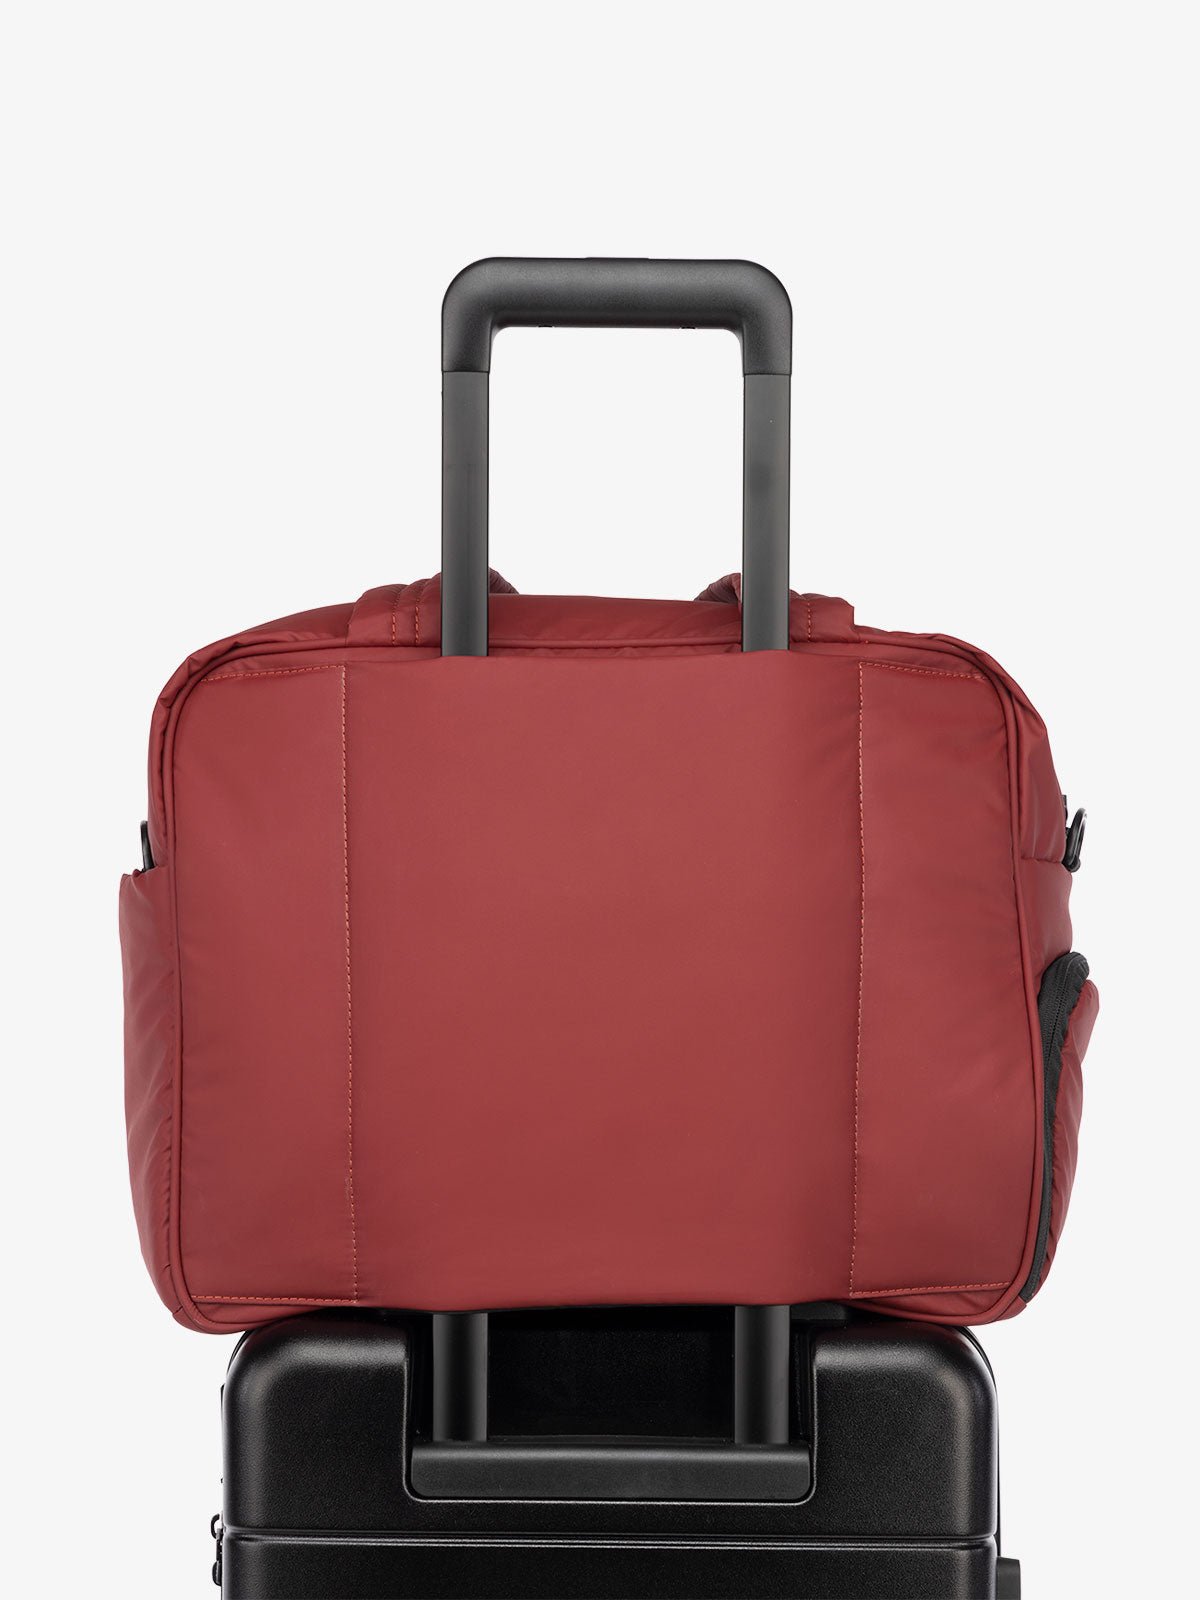 CALPAK Luka Duffle Bag with luggage sleeve in merlot